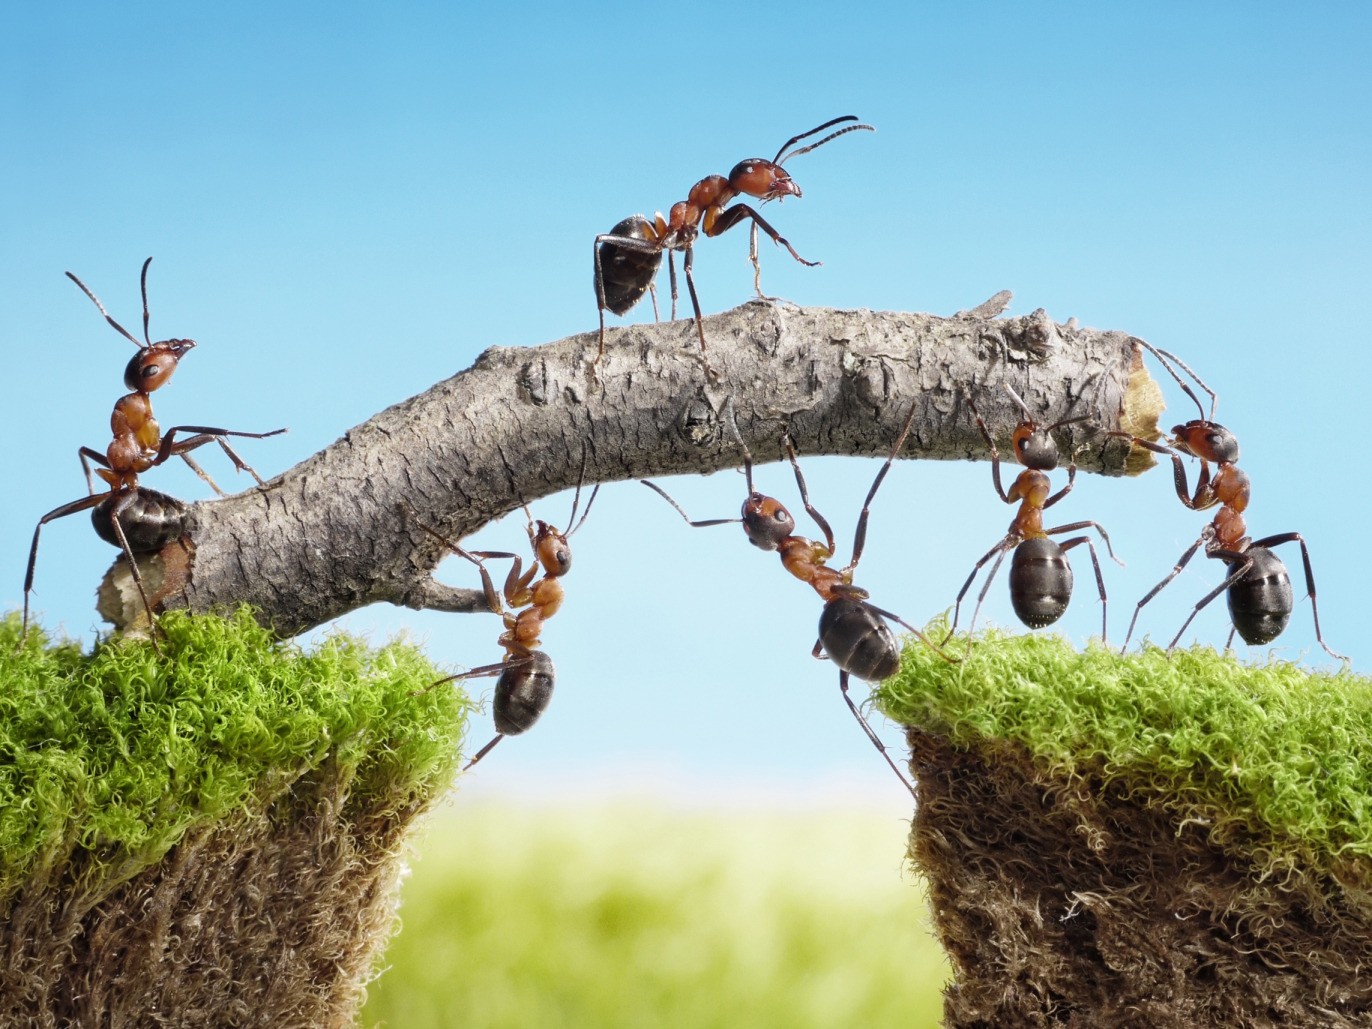 Ants capital venture